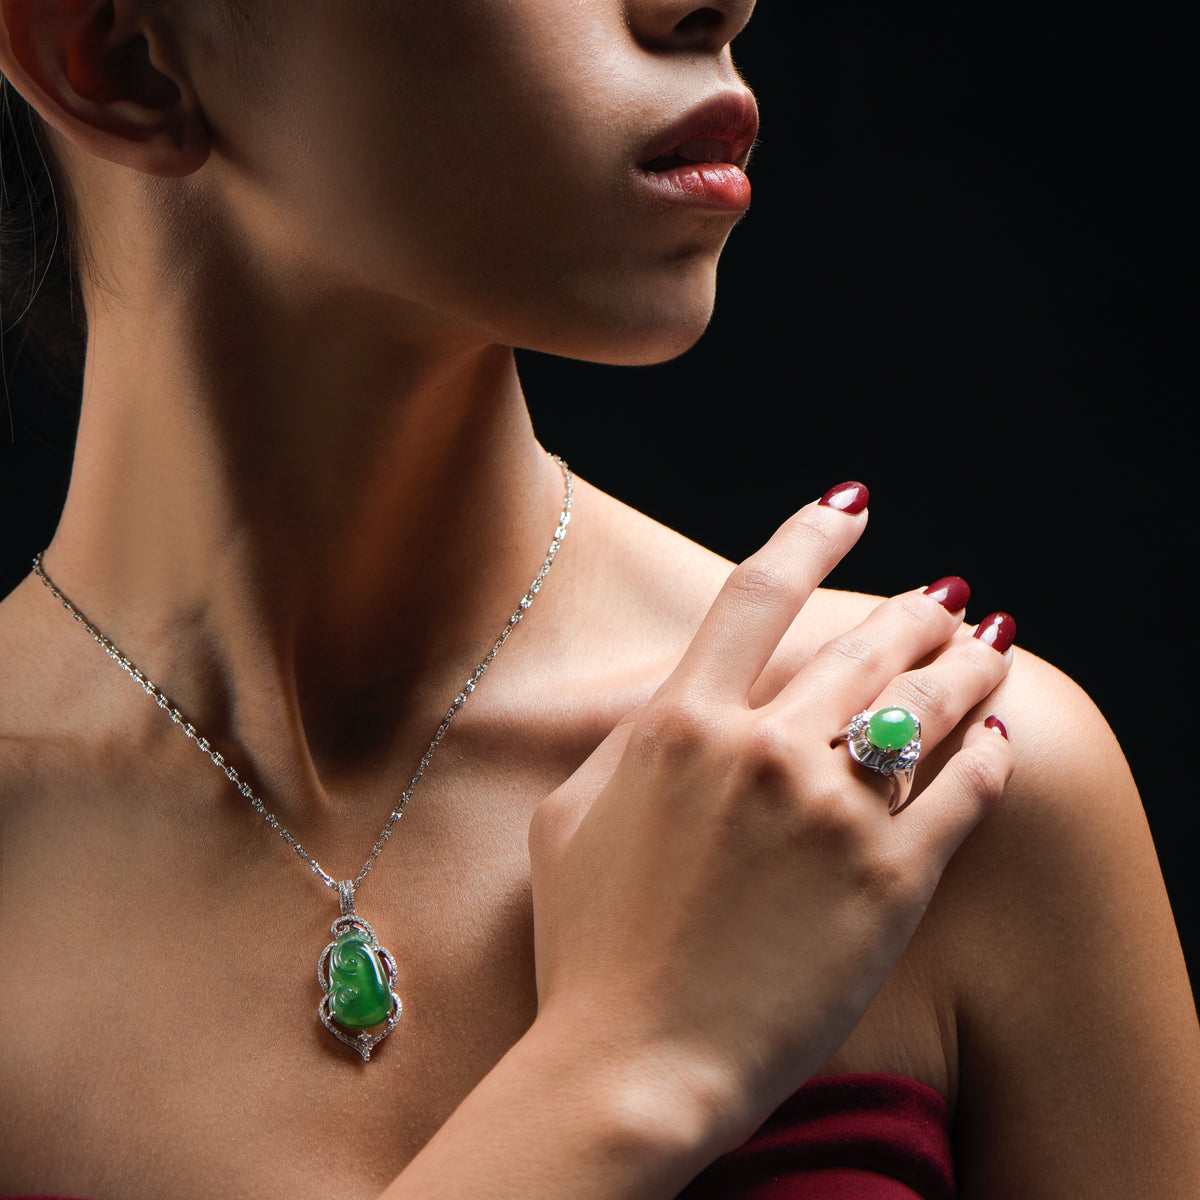 Woman wearing matching green jade pendant and green jade ring